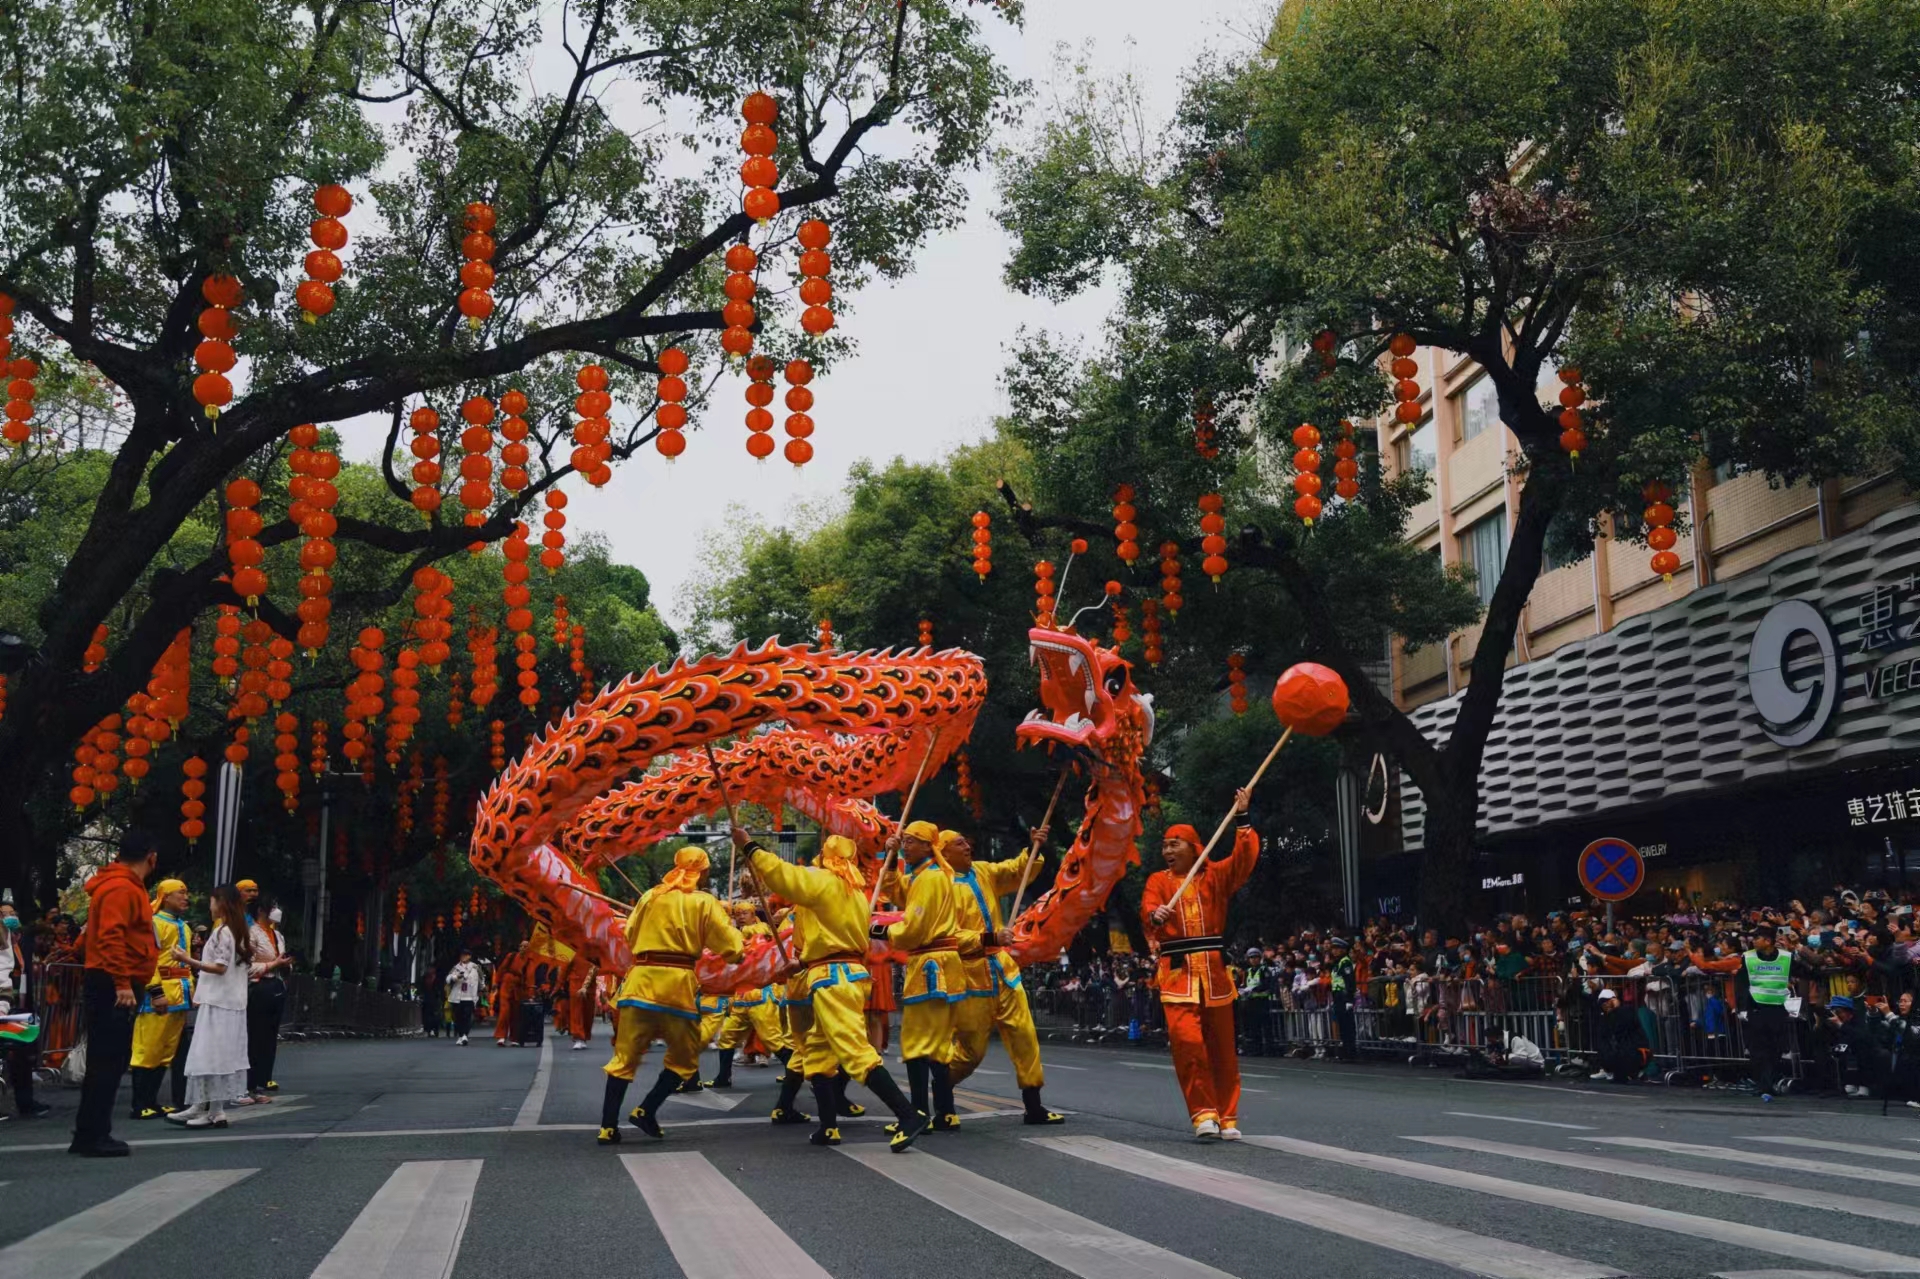 Jinzhou Dragon Dance draws crowds in Huizhou